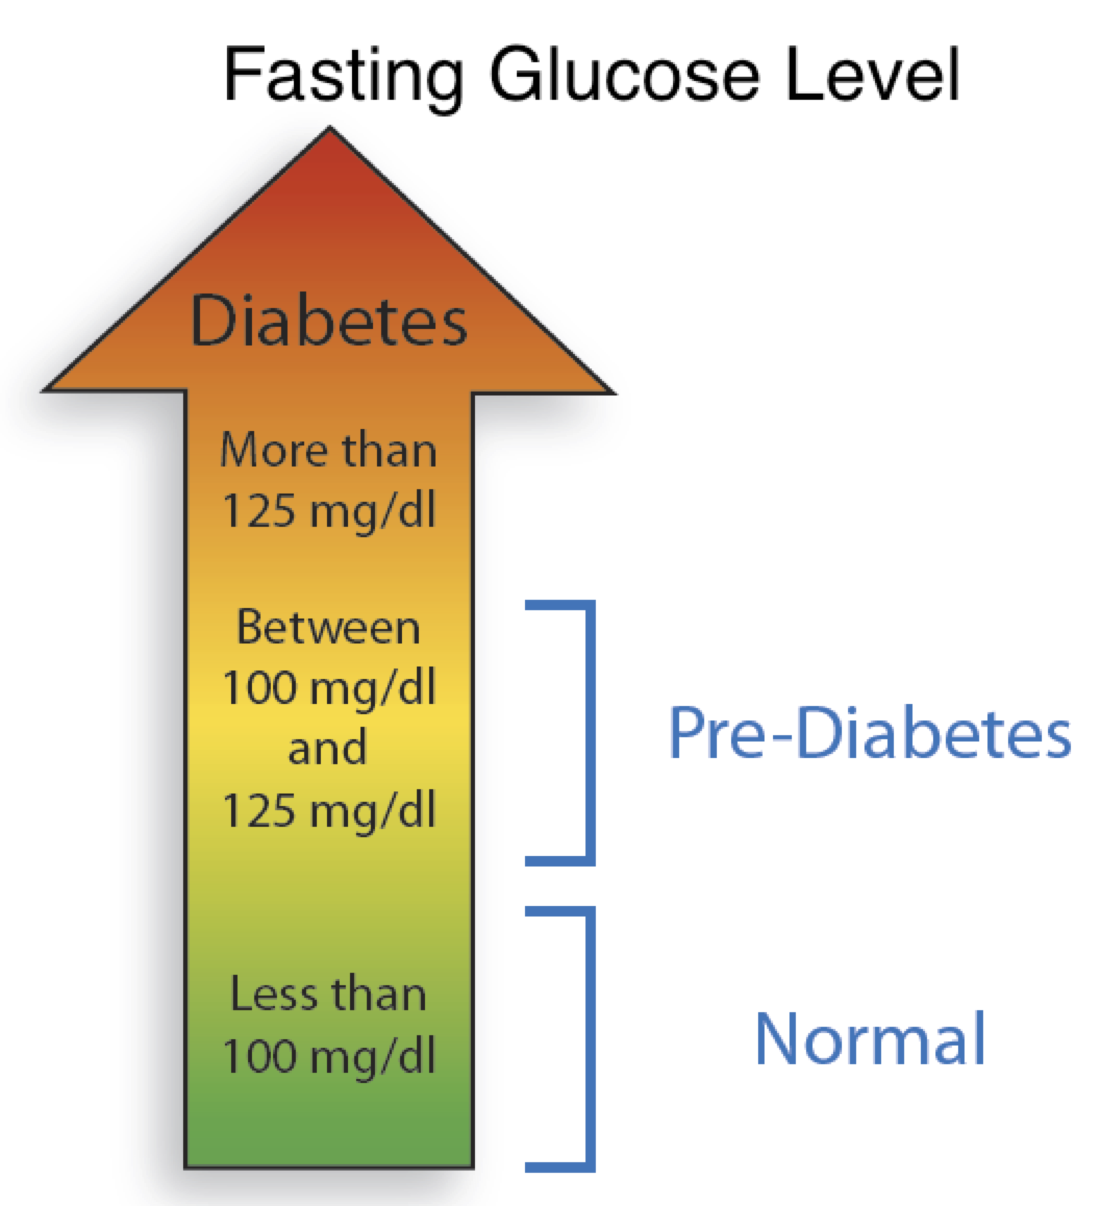 Fasting Blood Glucose Level